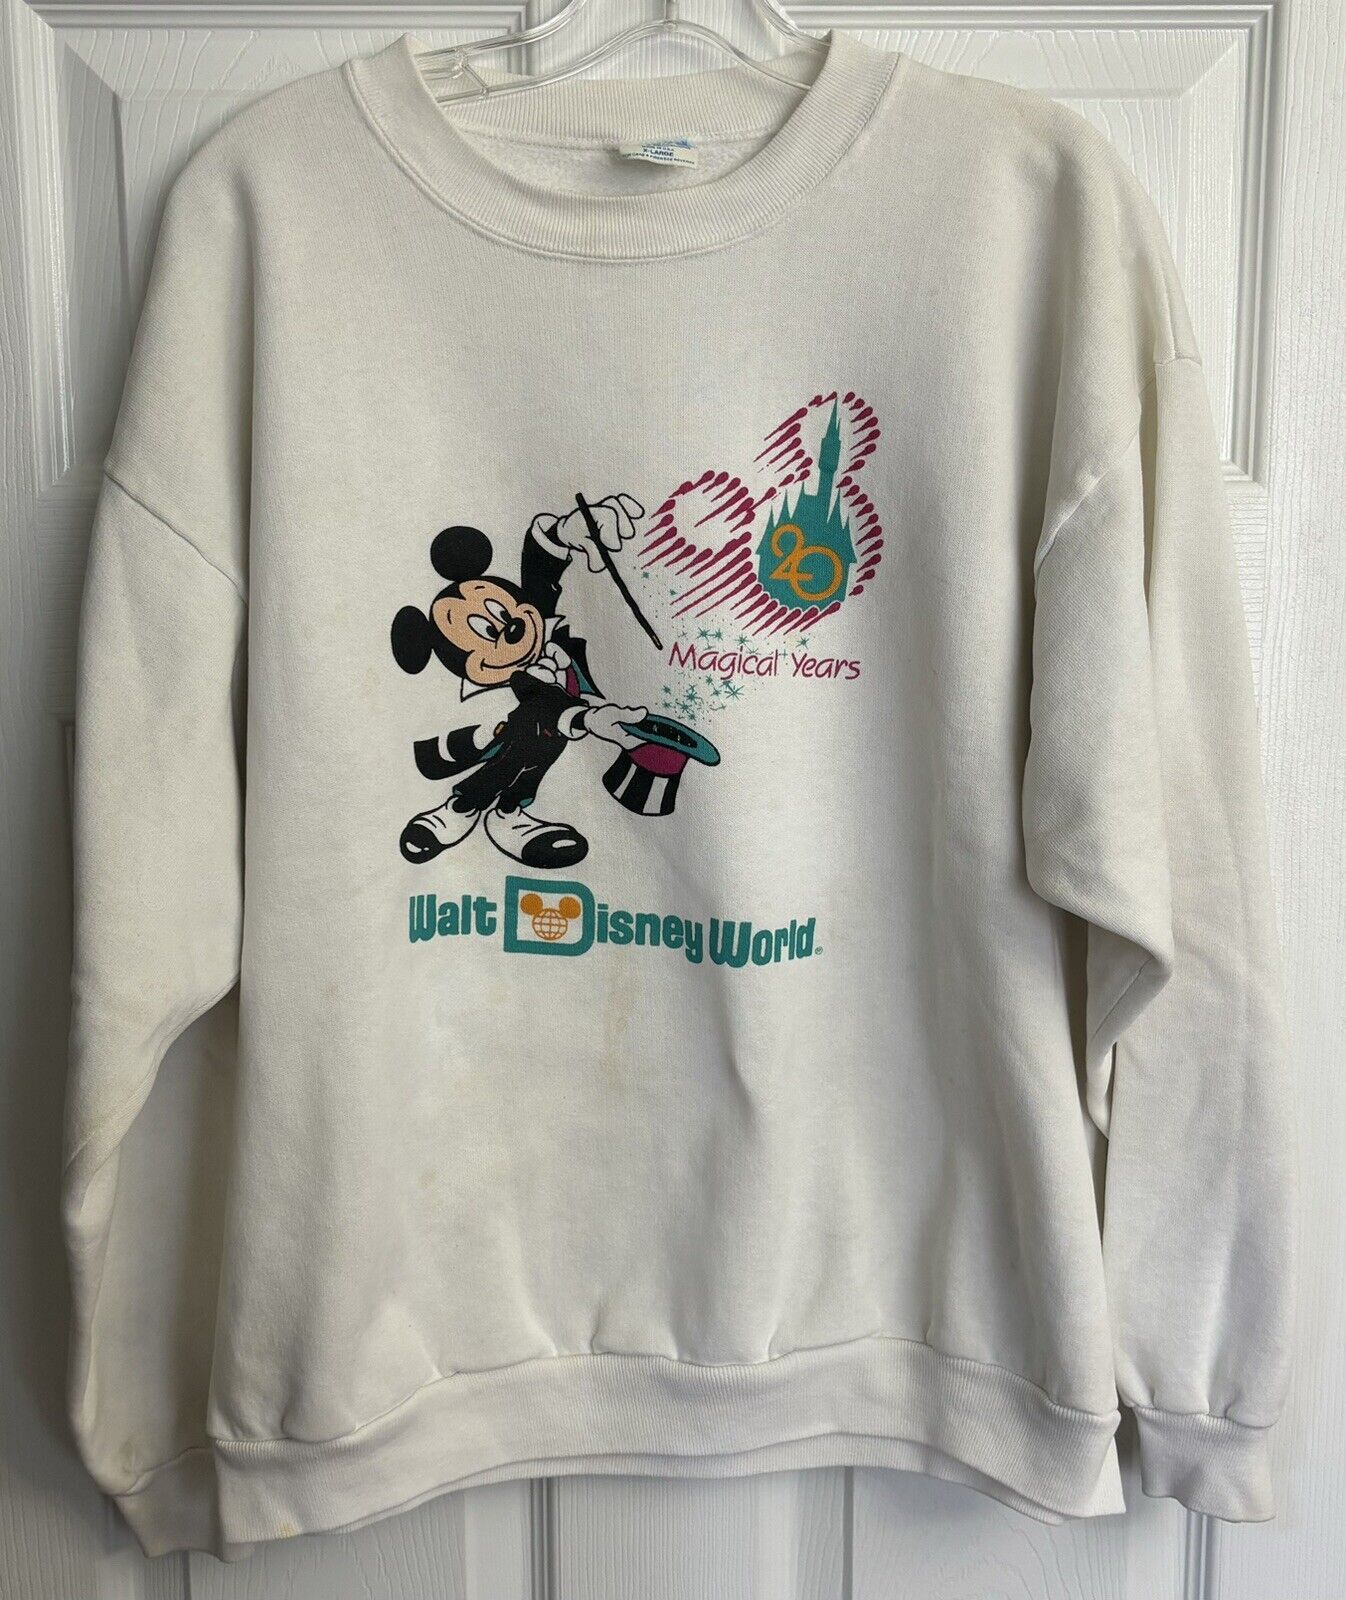 Vintage Walt Disney World 20 Magical Years Sweatshirt Size XL.*Stains* Needs OXI